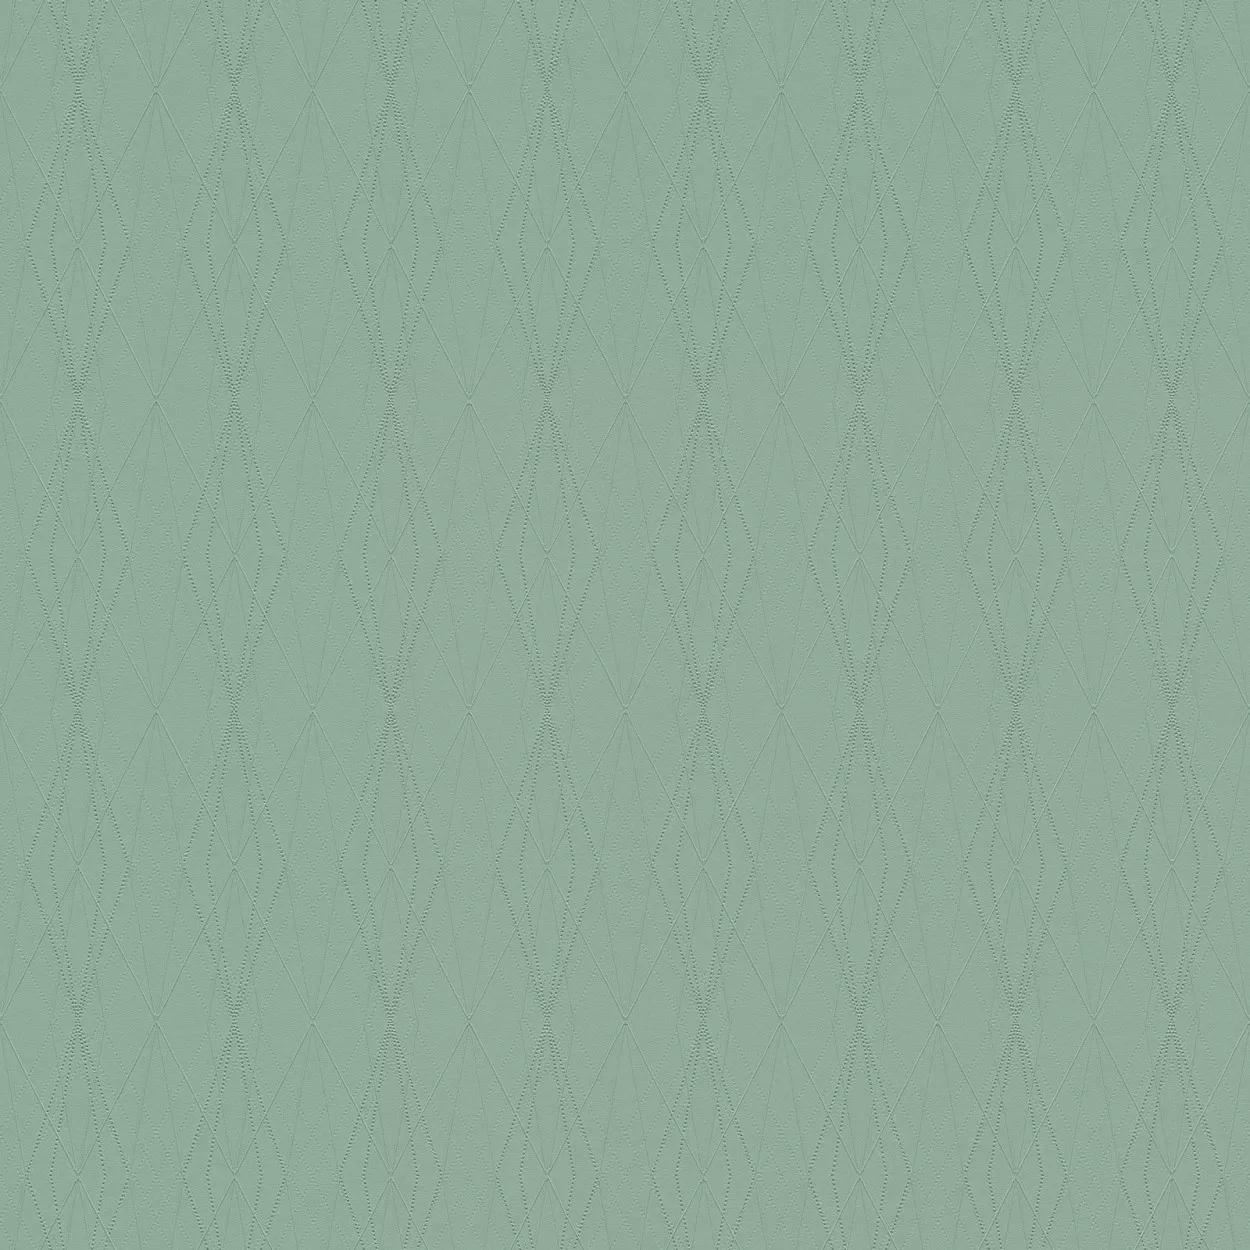 Zöld tapéta modern stílusban geometriai mintával